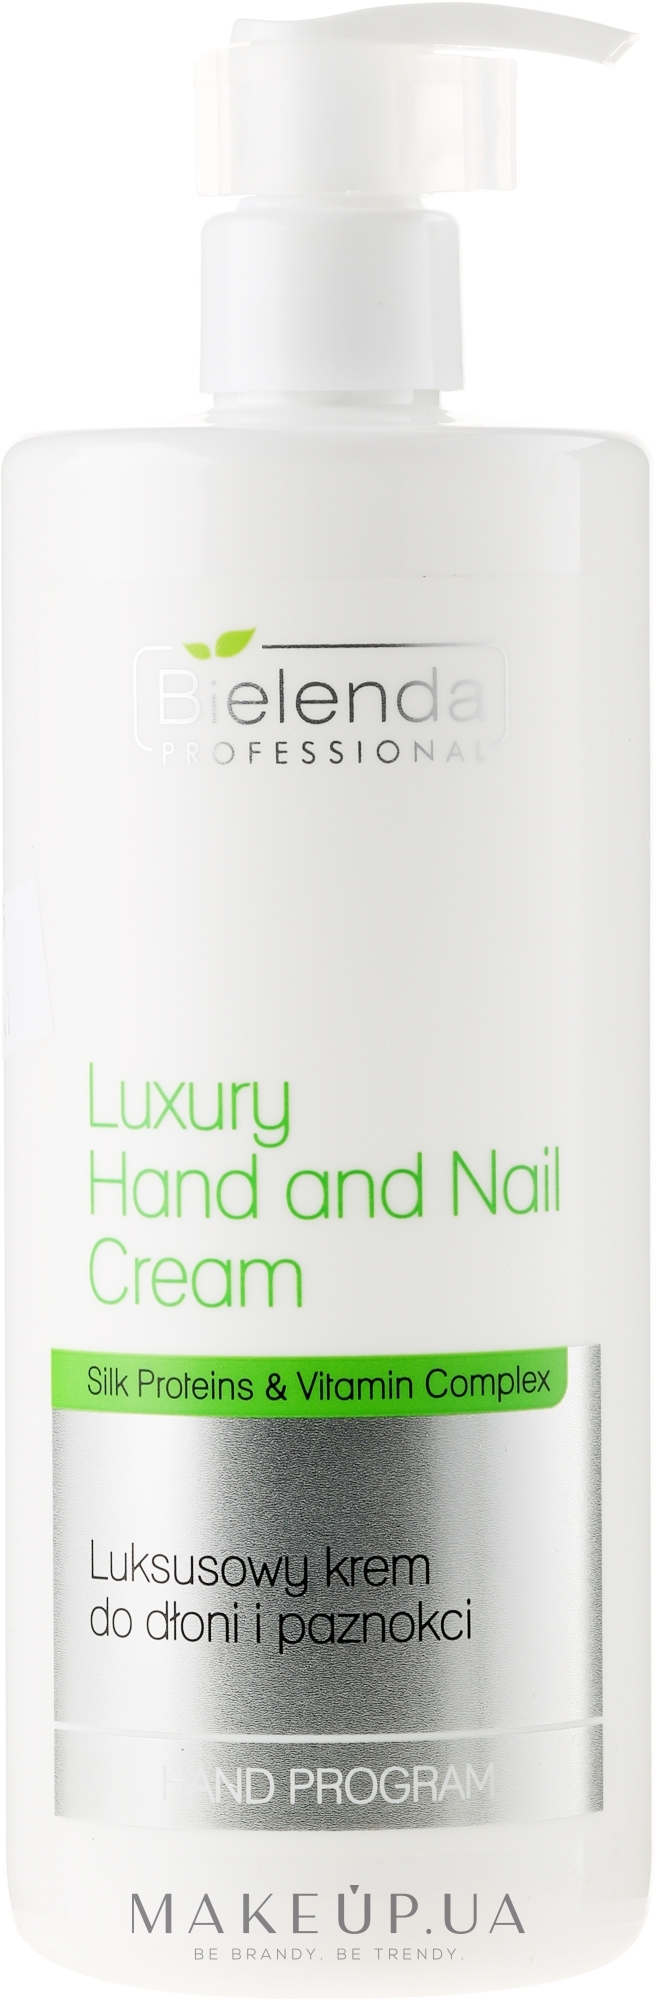 Ексклюзивний крем для рук - Bielenda Professional Luxury Hand and Nail Cream — фото 500ml